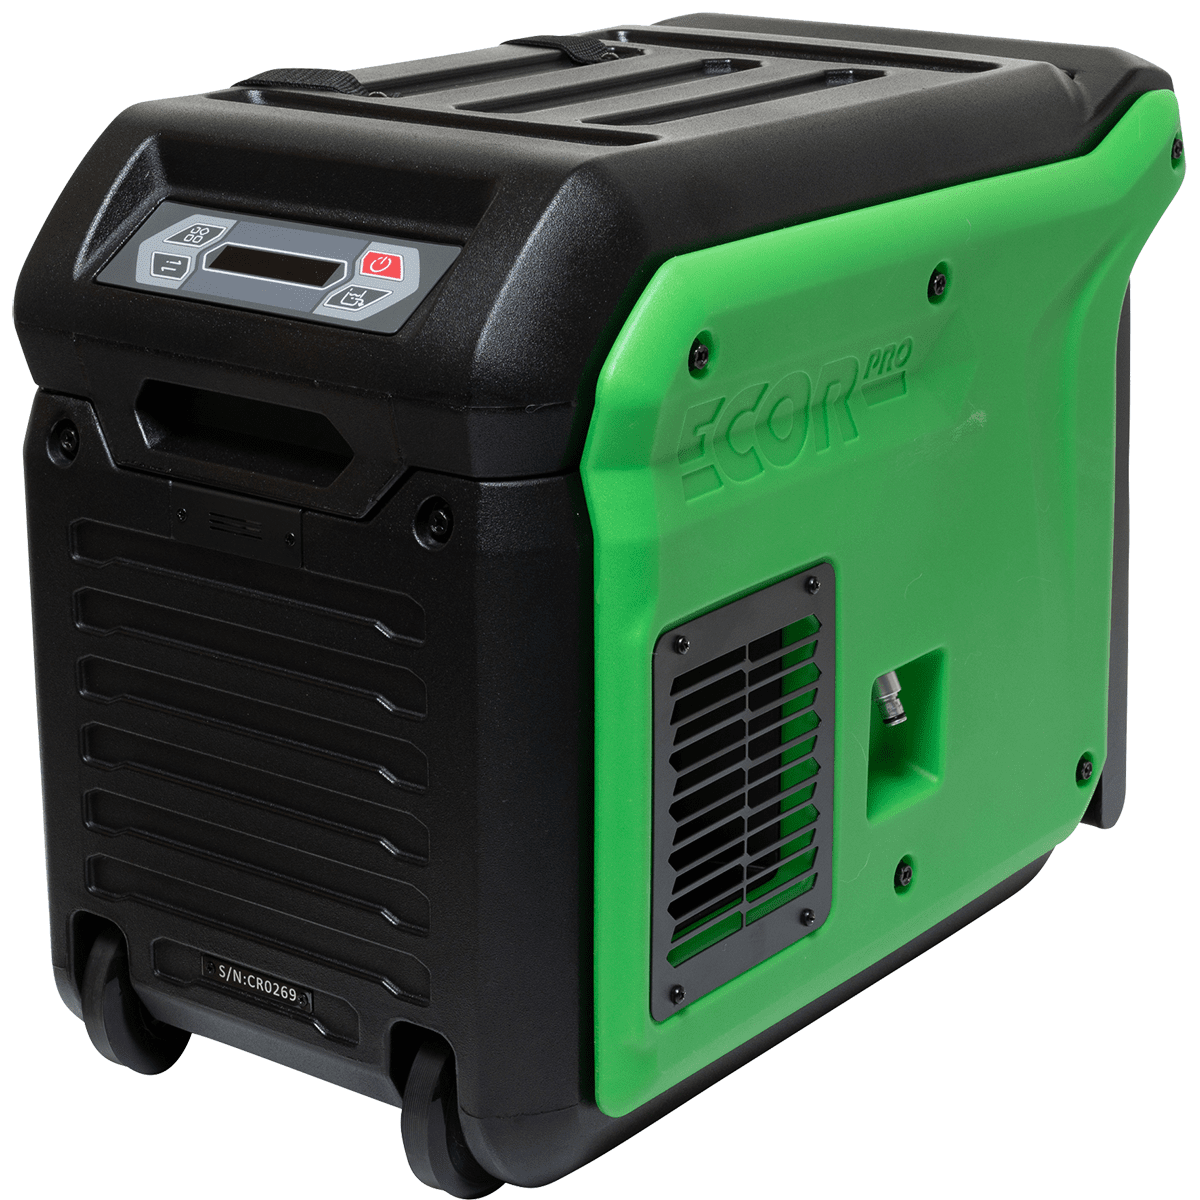 Ecor Pro 170LGR Low Grain Refrigerant Dehumidifier W/ Pump - Green